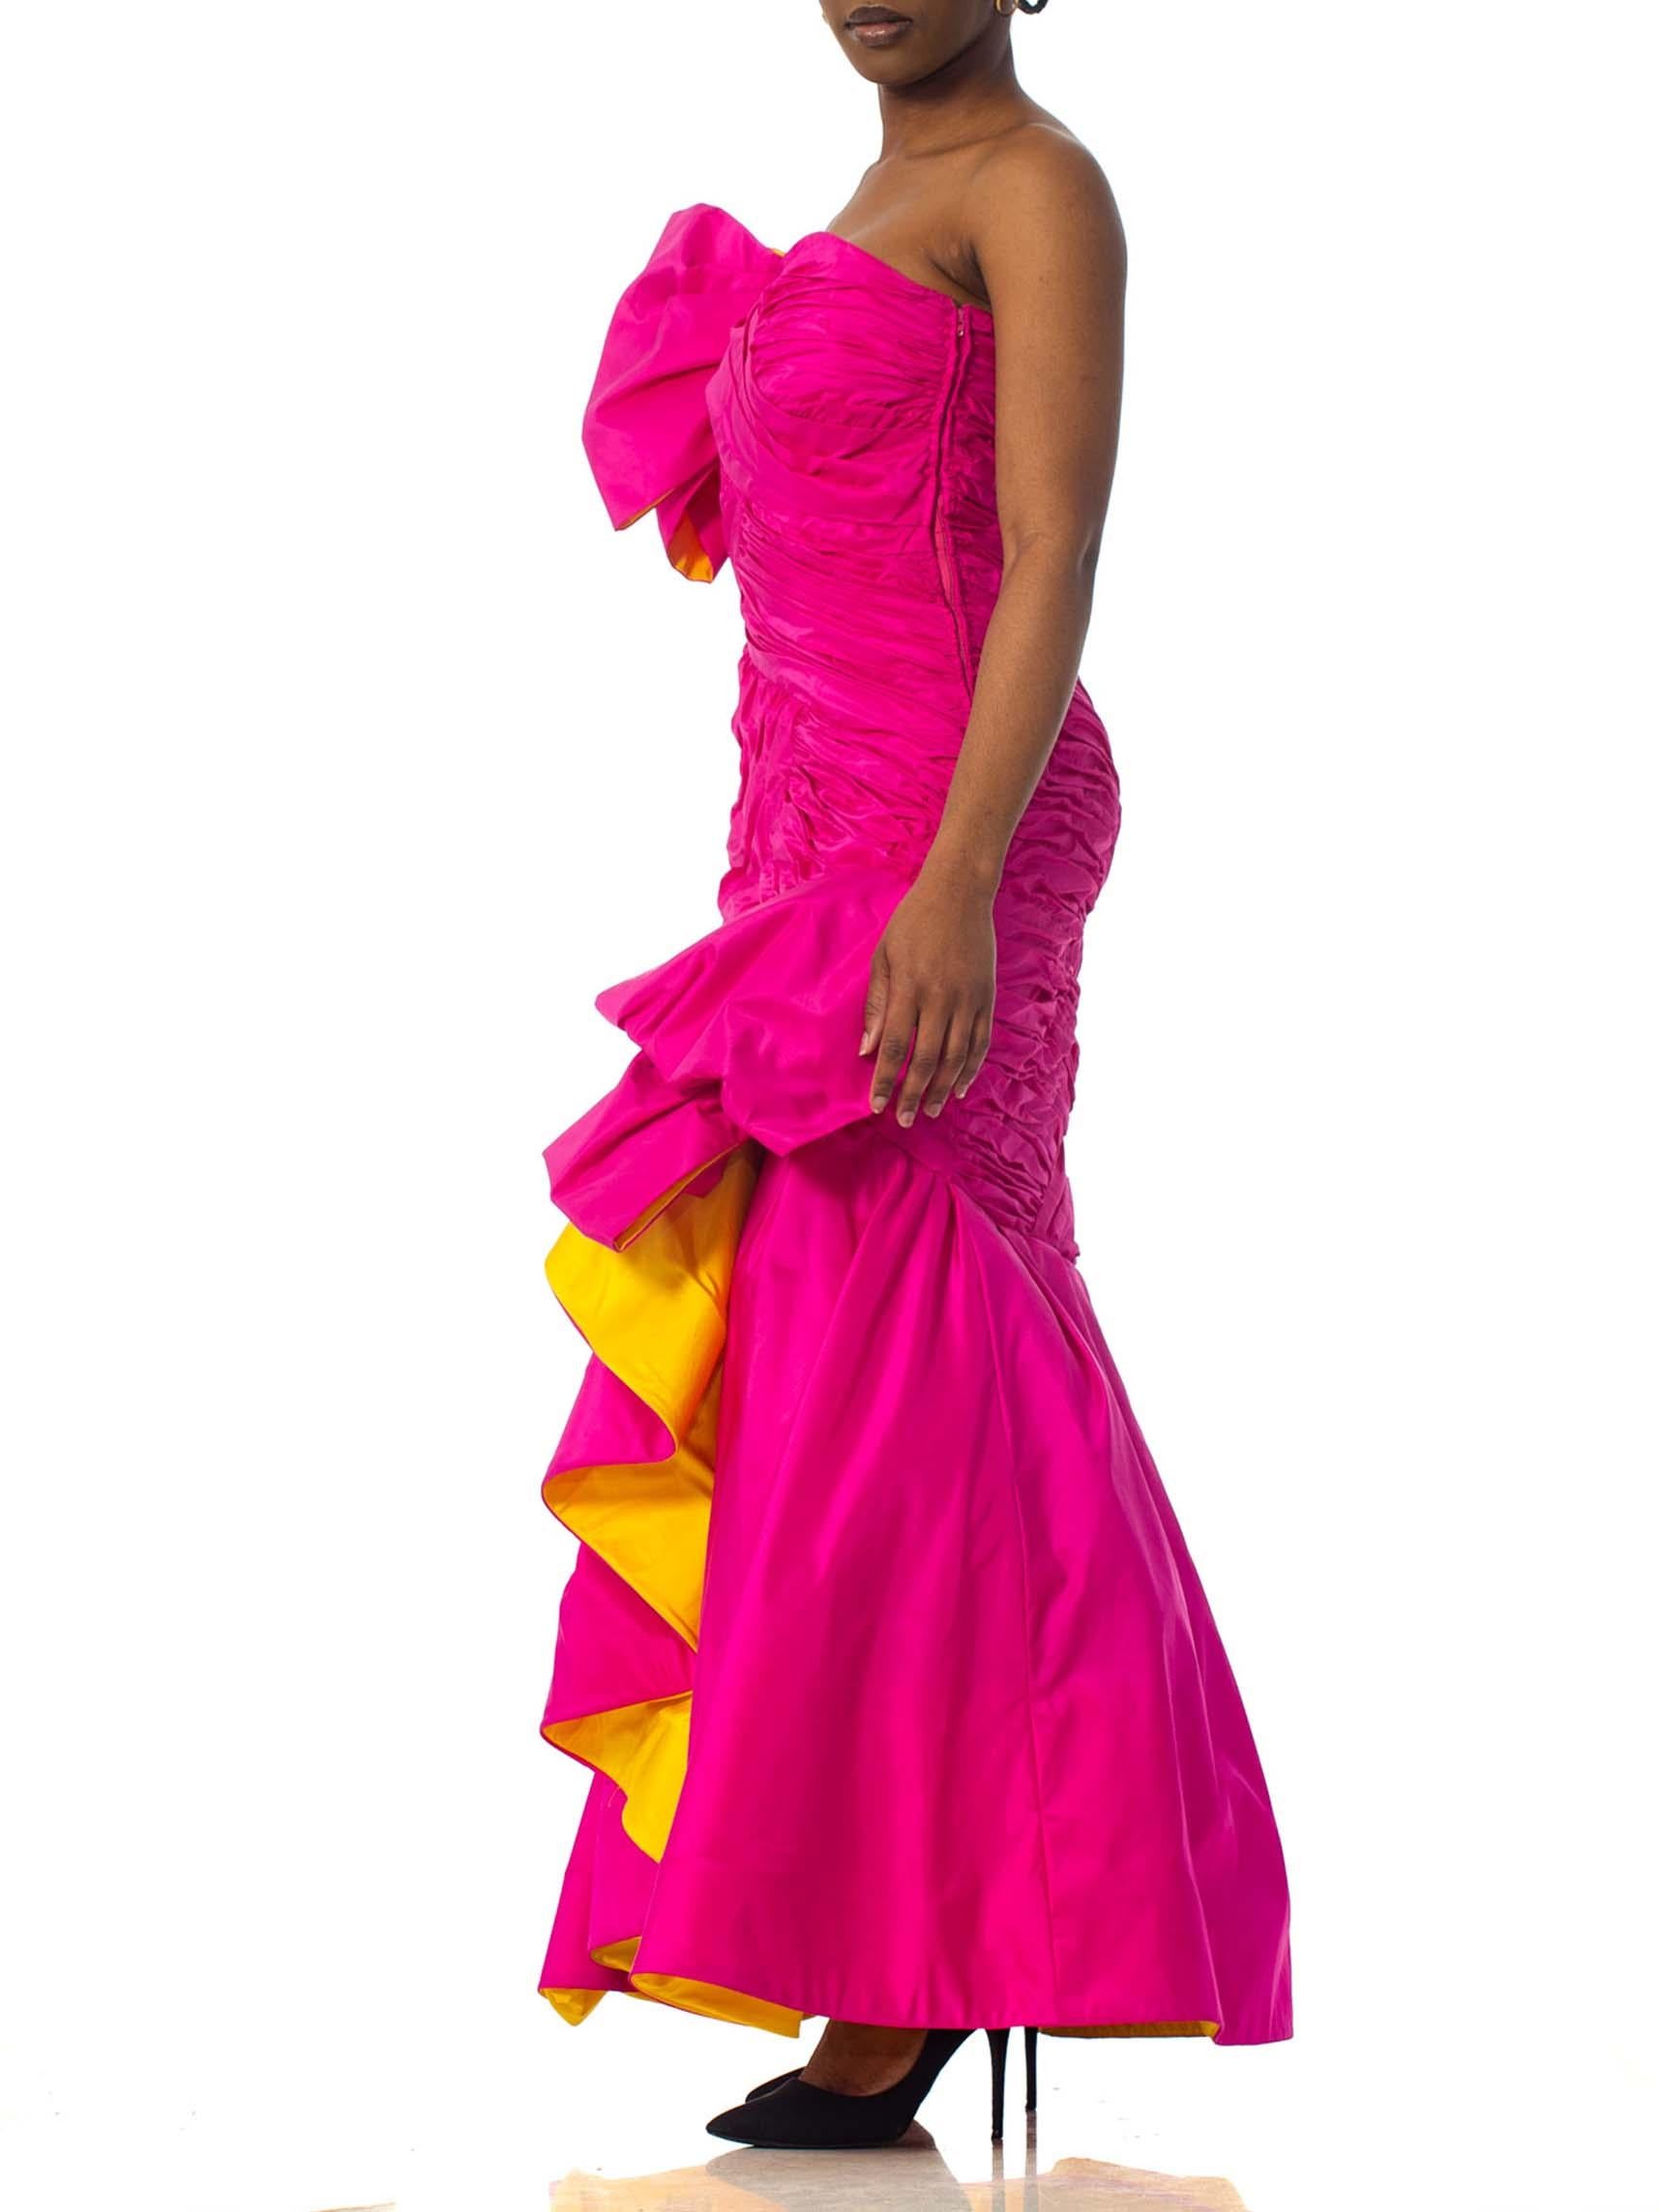 hot pink taffeta dress